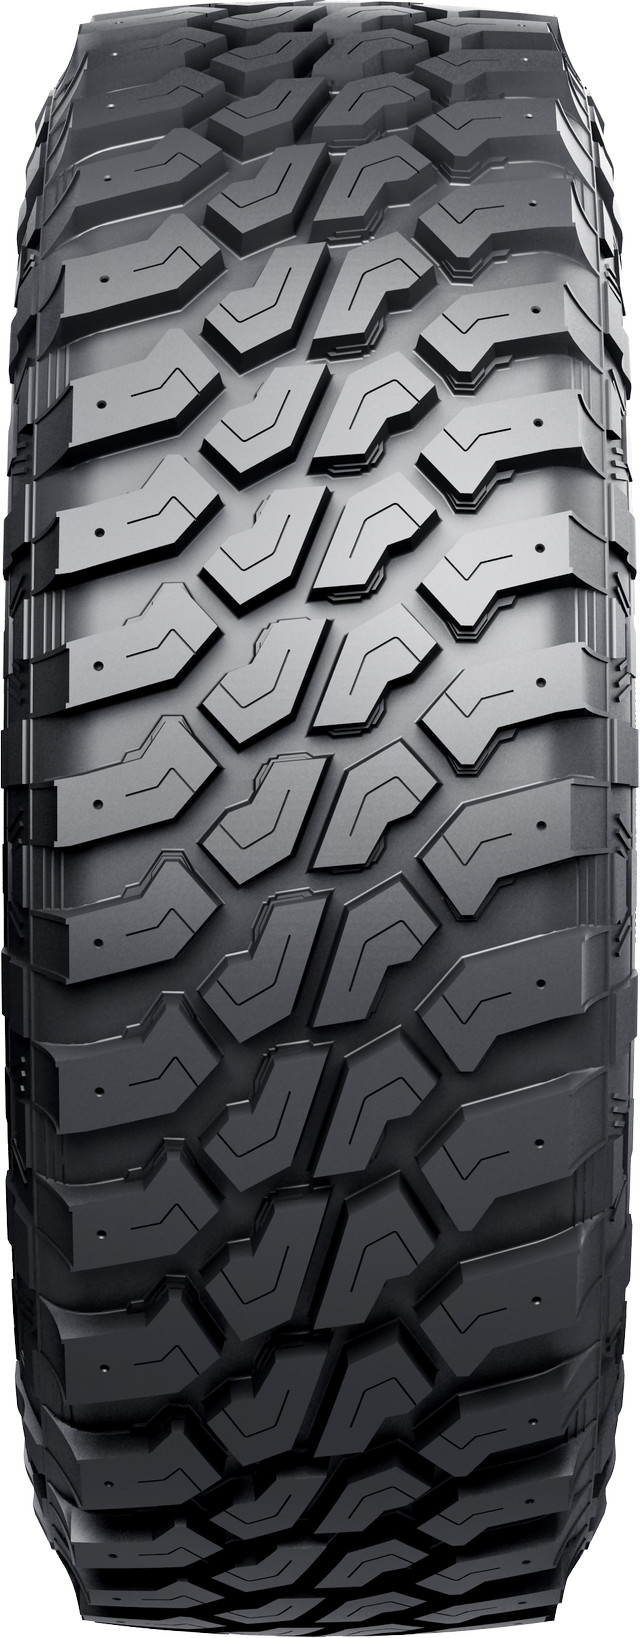 MUD-TERRAIN 33*12.50R20 Firemax FM523 33125020 33x12.5R20 tires in Tires & Rims in Calgary - Image 4